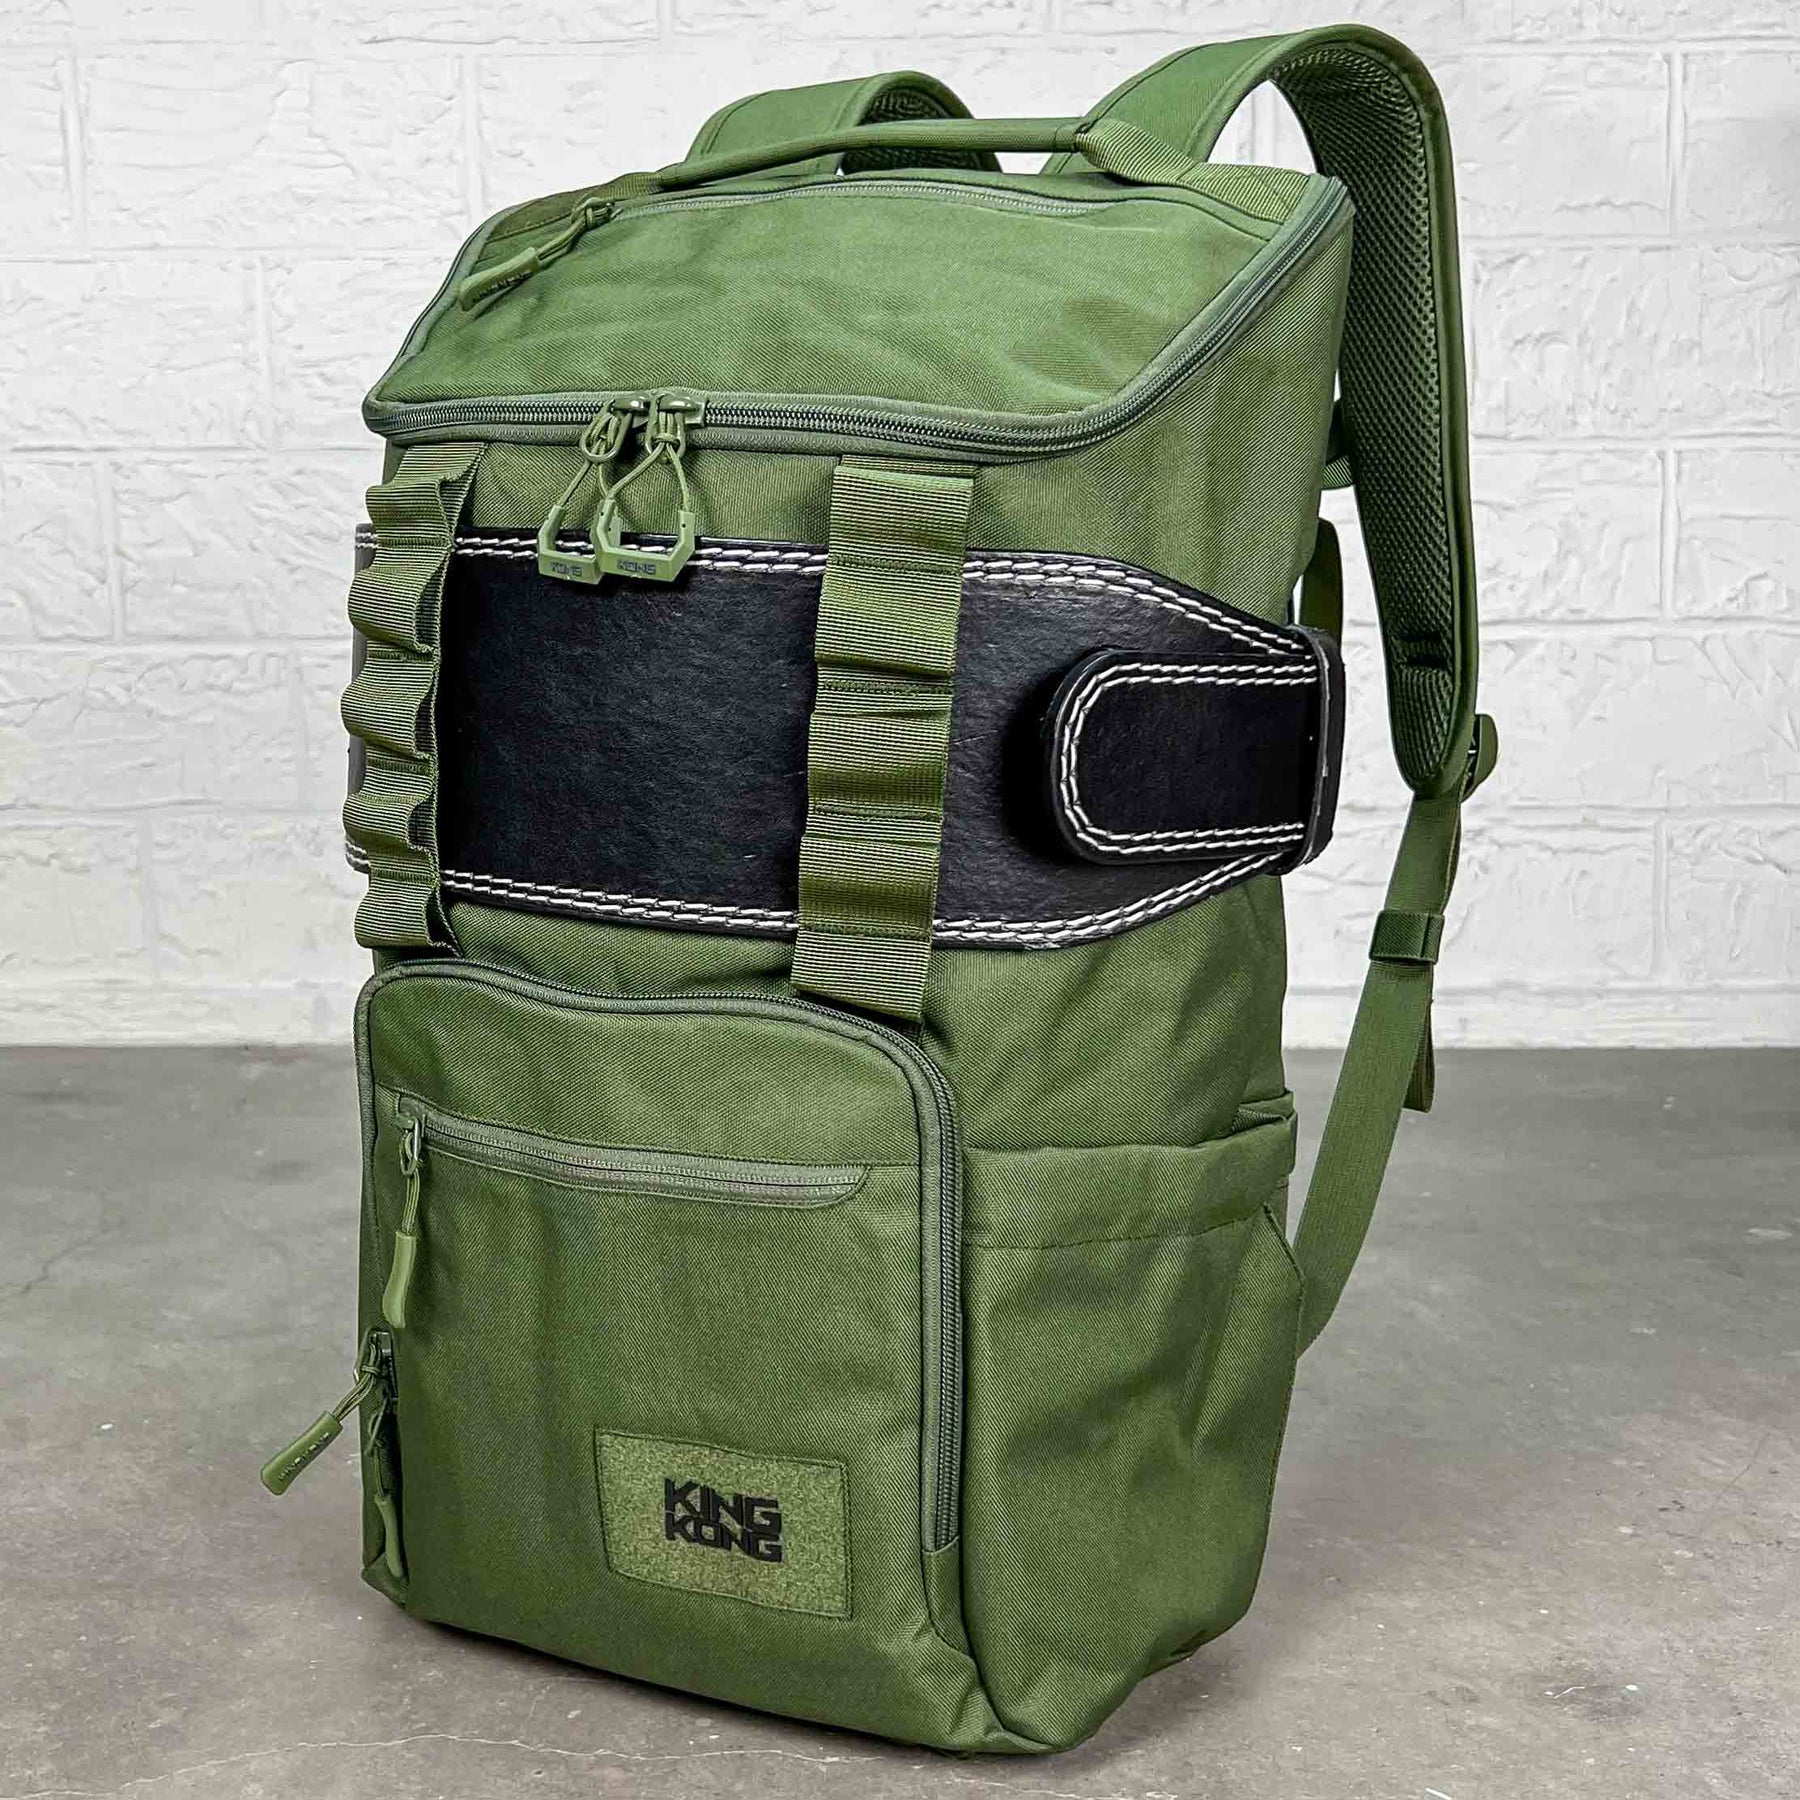 King Kong Core Backpack - Medium 25L - Black